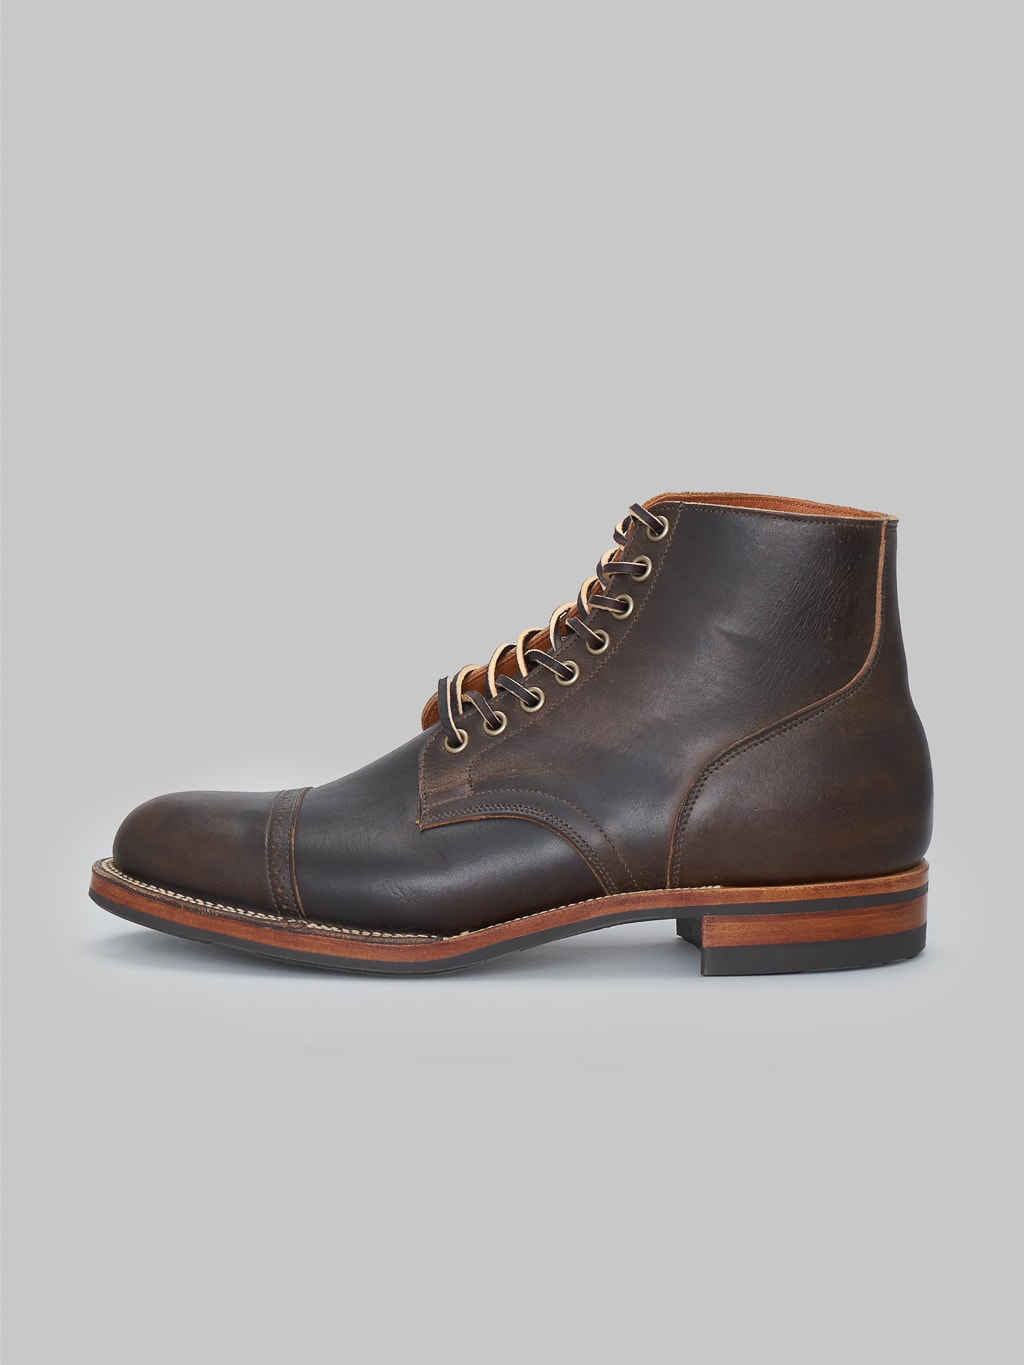 viberg service boot 2023 bct antique phoenix dark brown leather